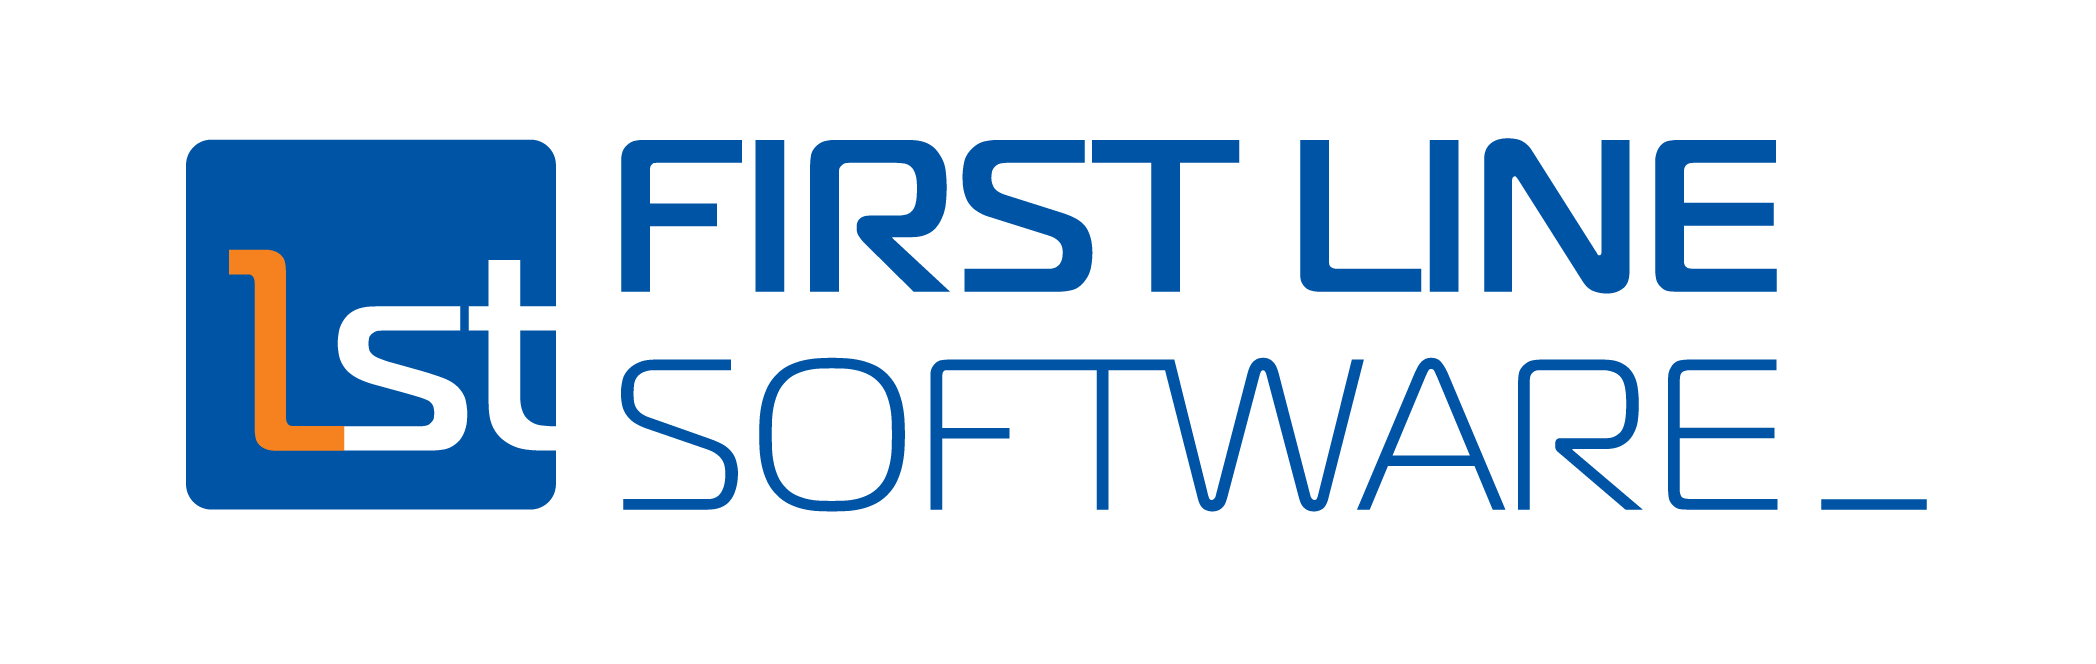 First line support. First line. Software компания. Line software. One line логотип компания.